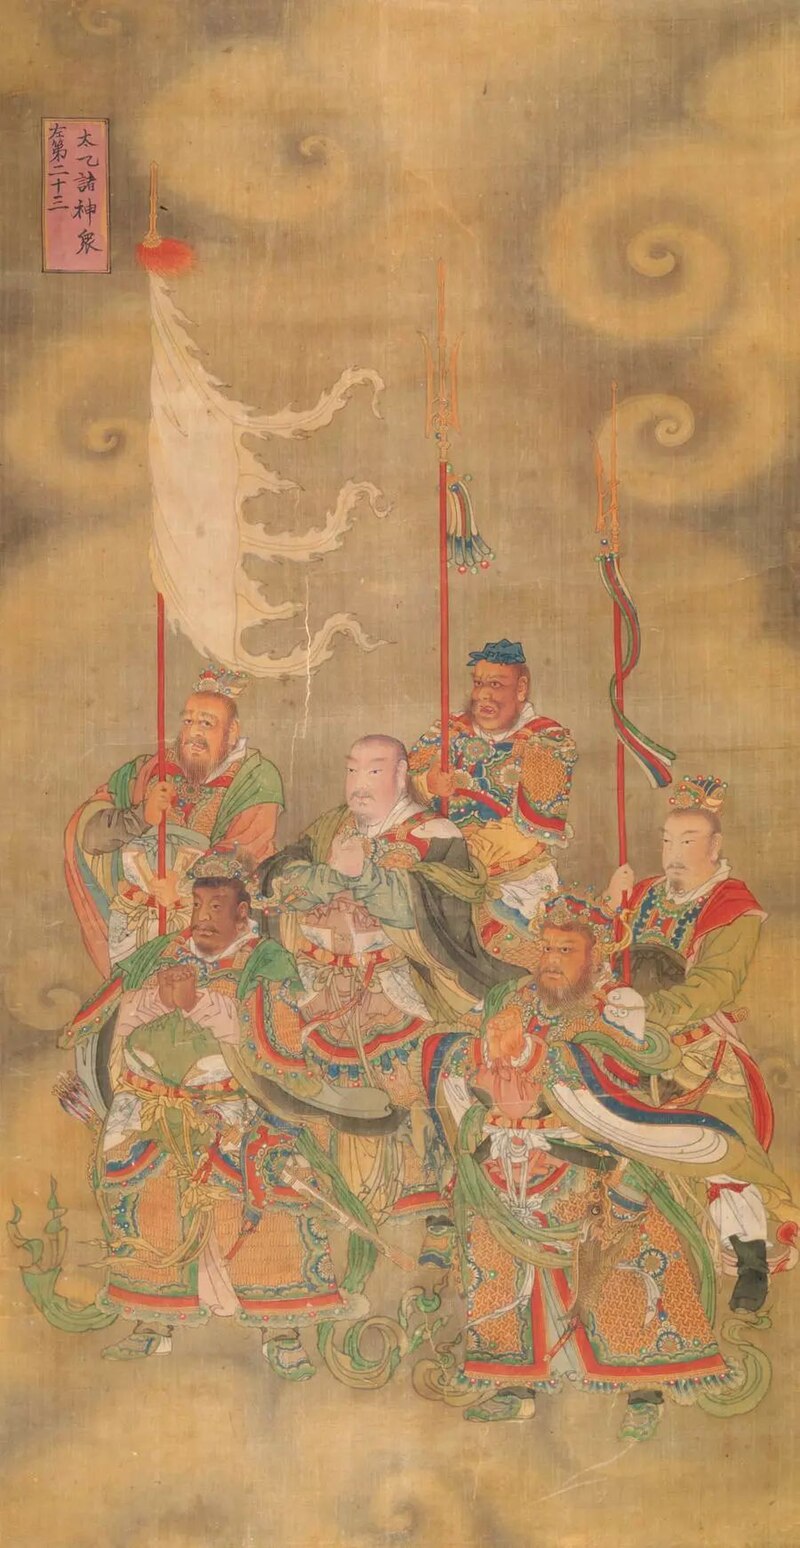 File:水陆画宝宁寺 太乙诸神众.jpg - Wikimedia Commons